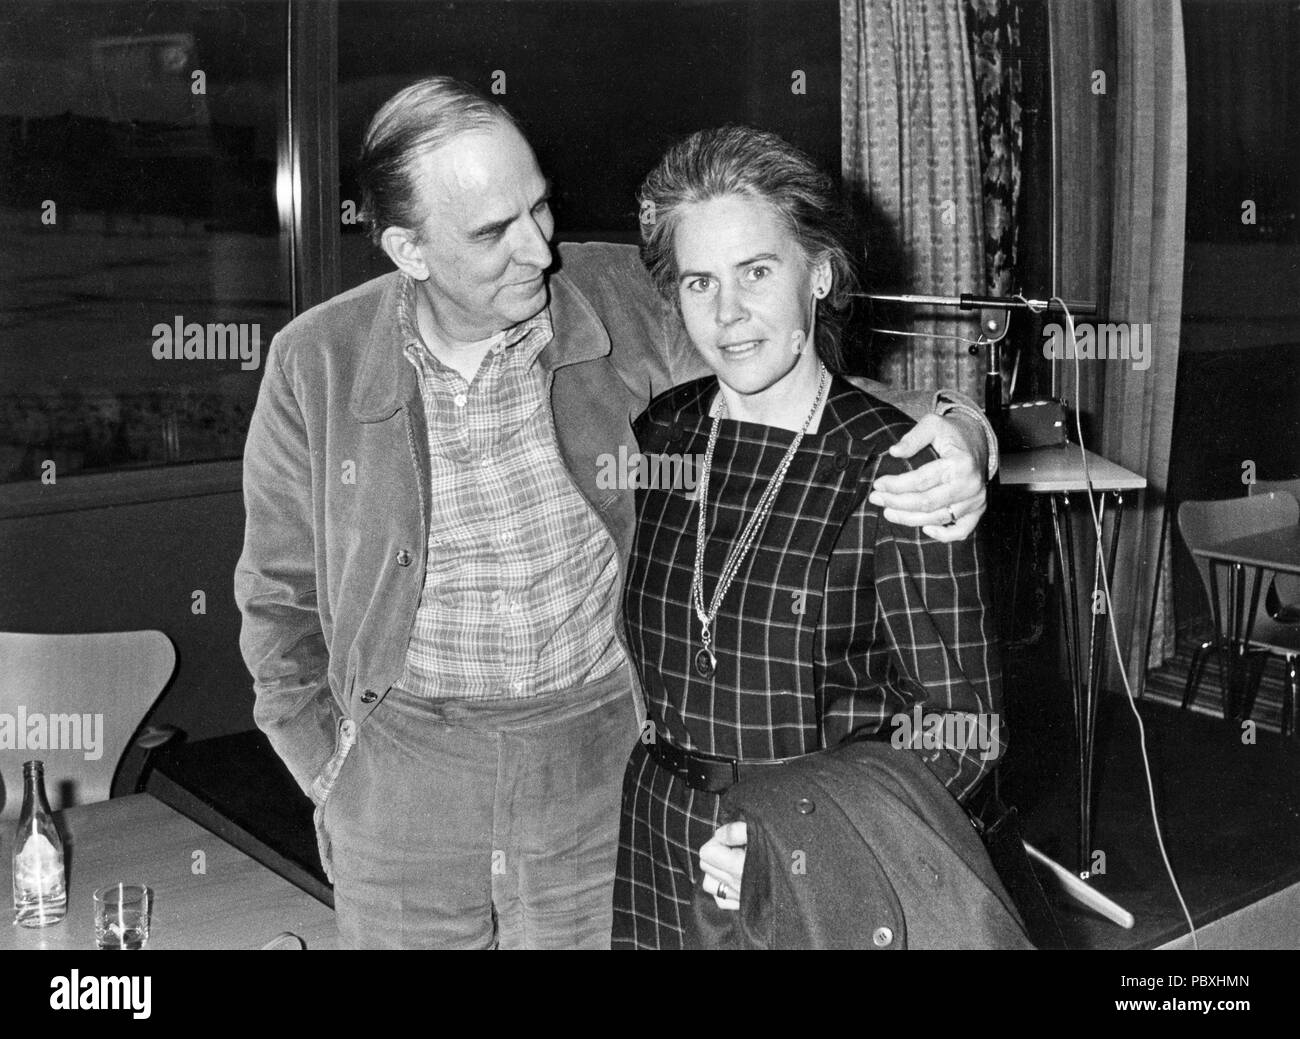 Ingmar Bergman. 1918-2007. Swedish film director. Here together with his  wife Ingrid von Rosen. 1980 Stock Photo - Alamy